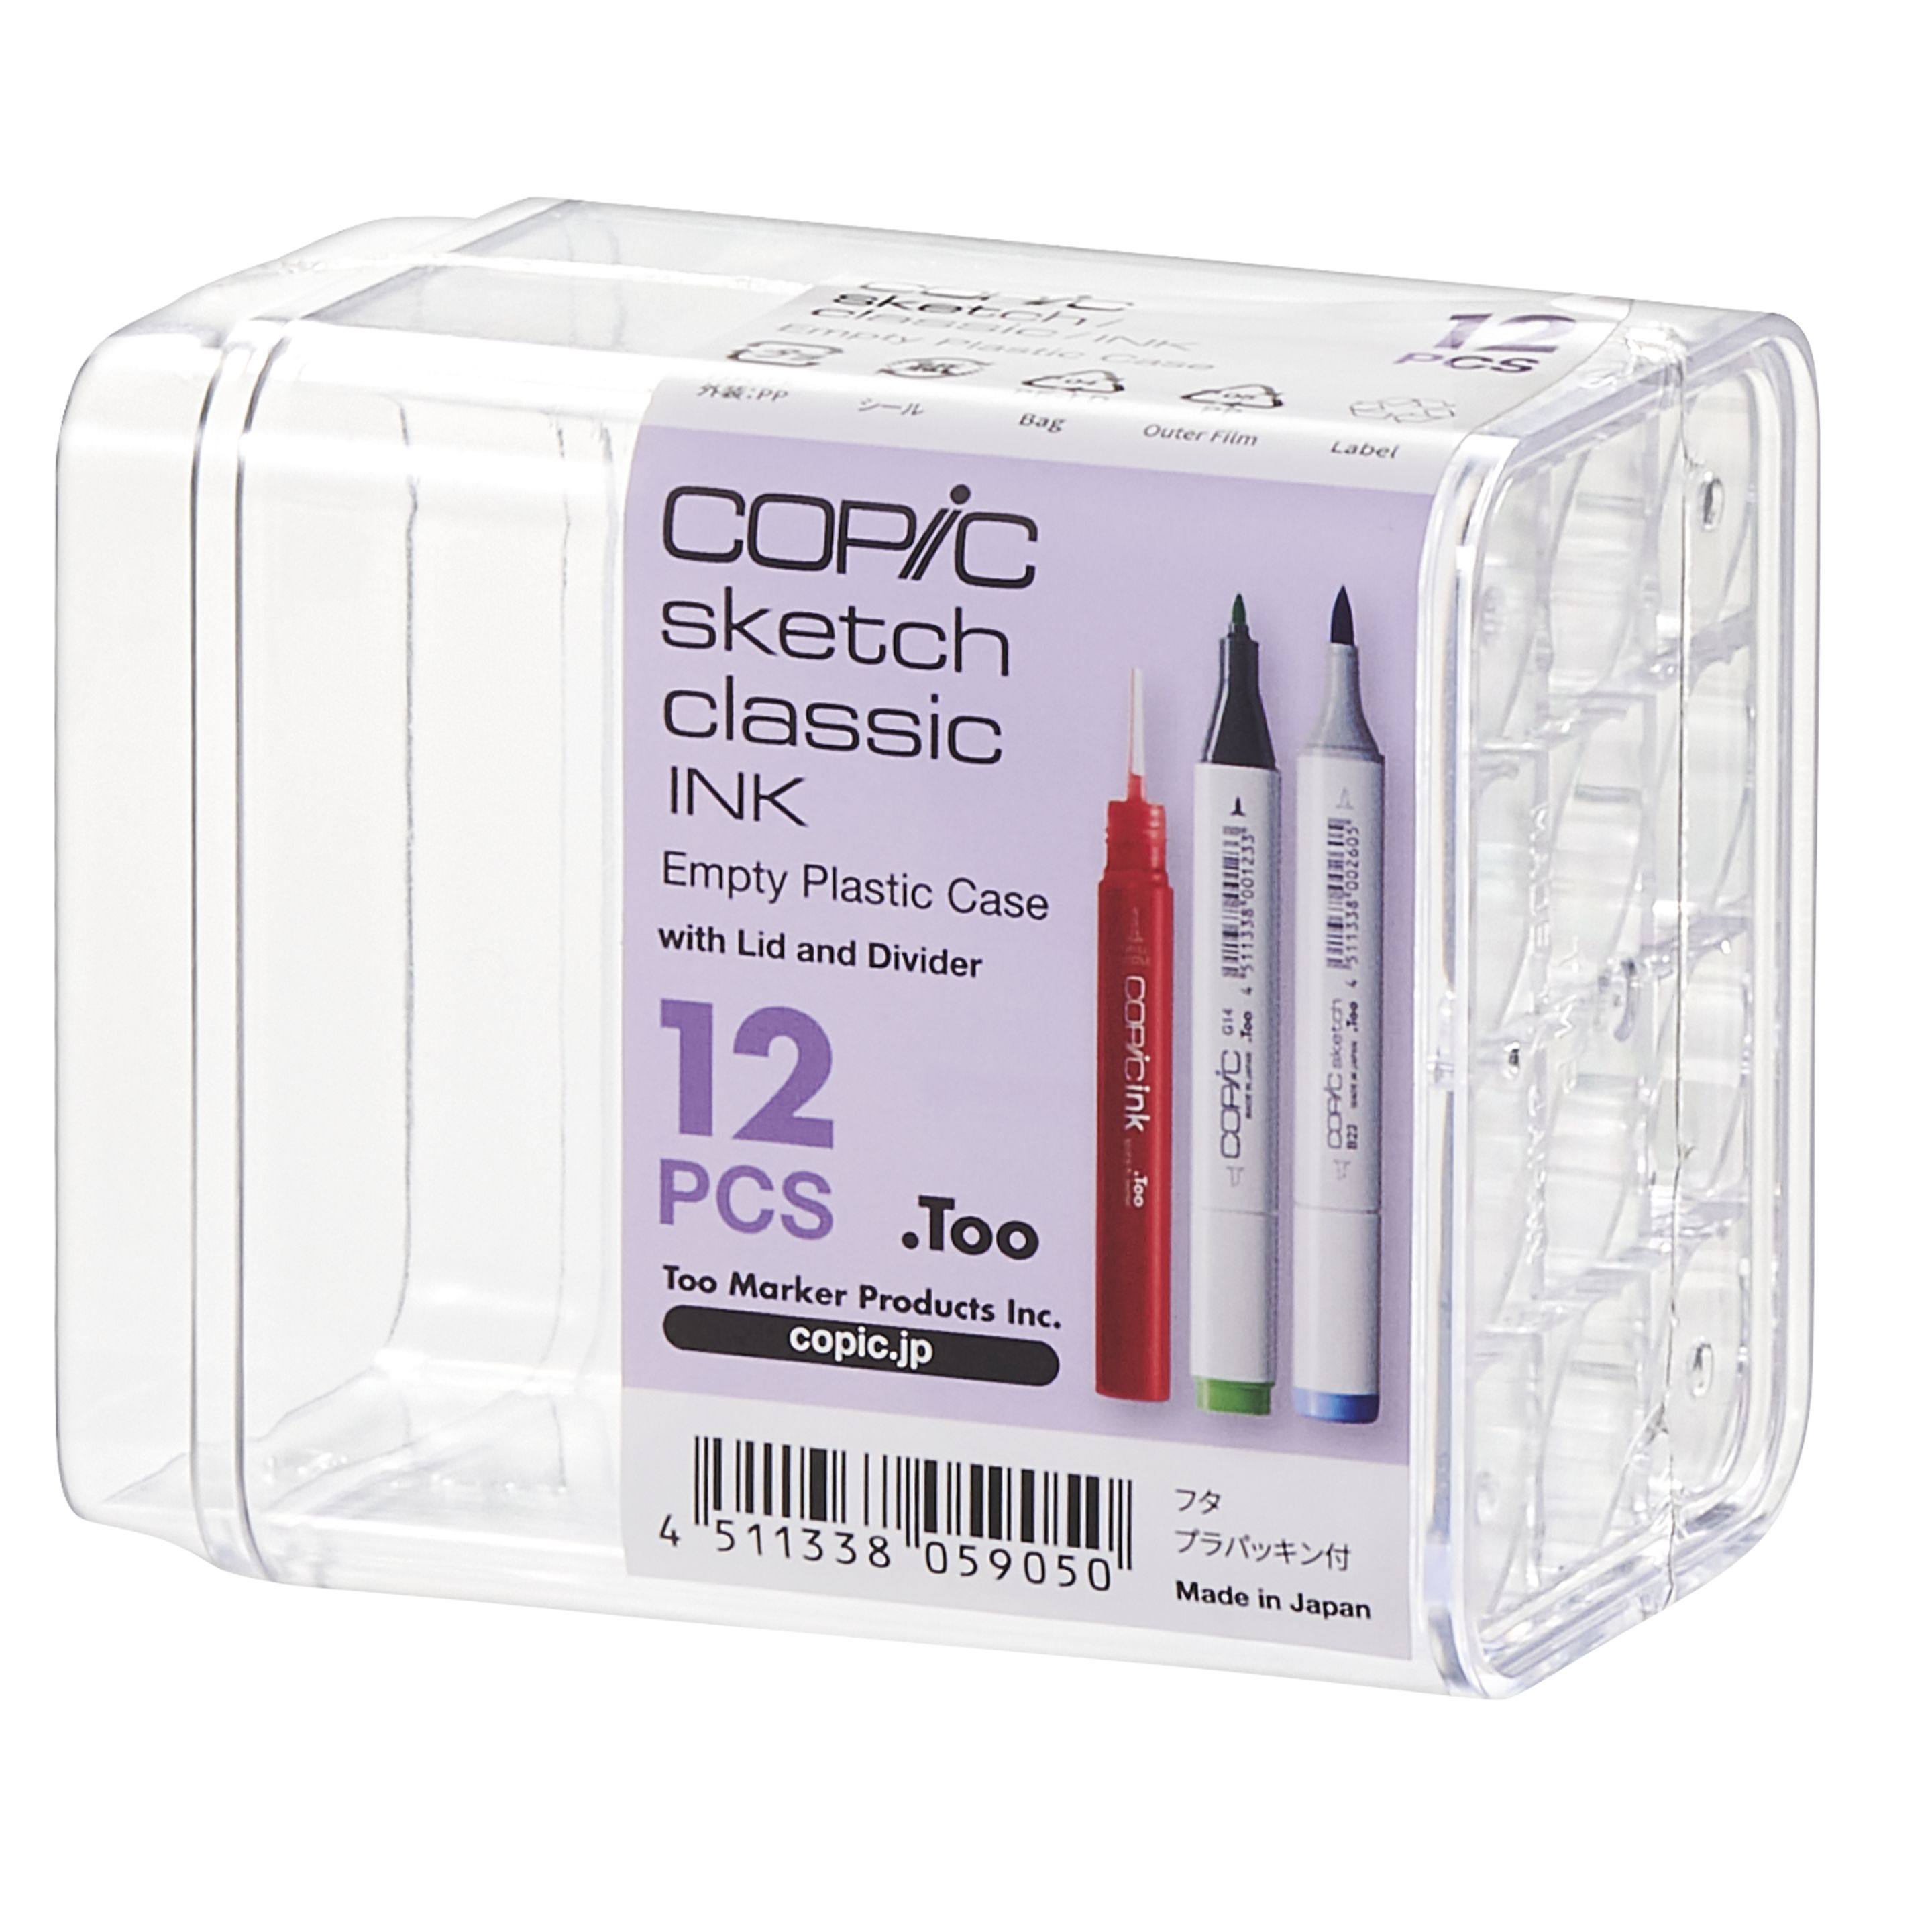 Copic Acryl-Display leer für Sketch, Ink und Classic